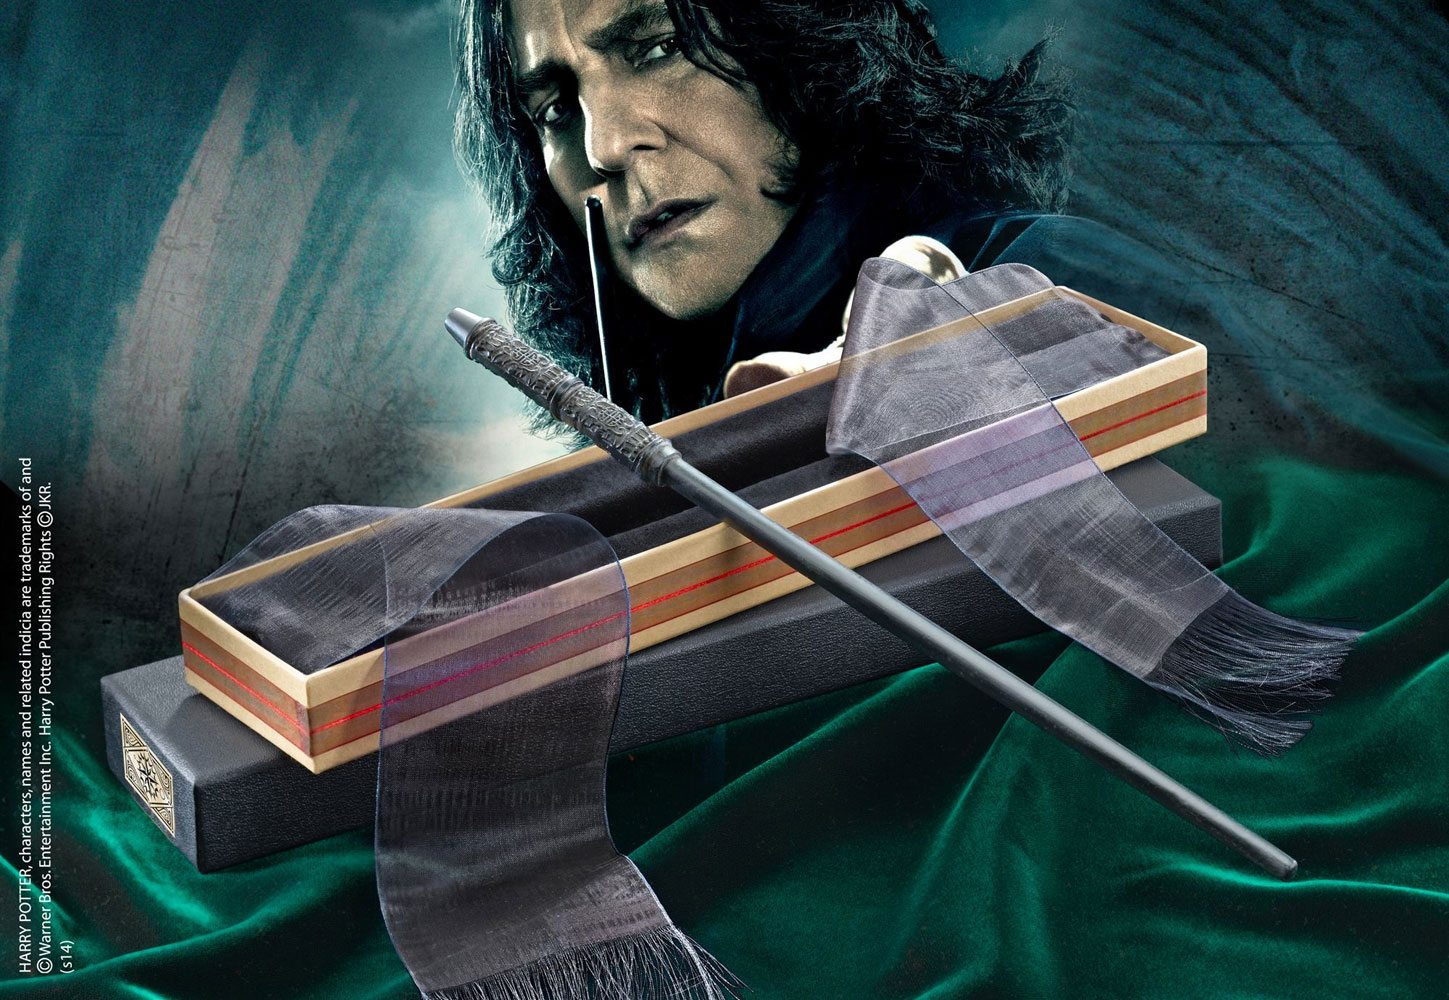 Harry Potter Professor Snapes Wand